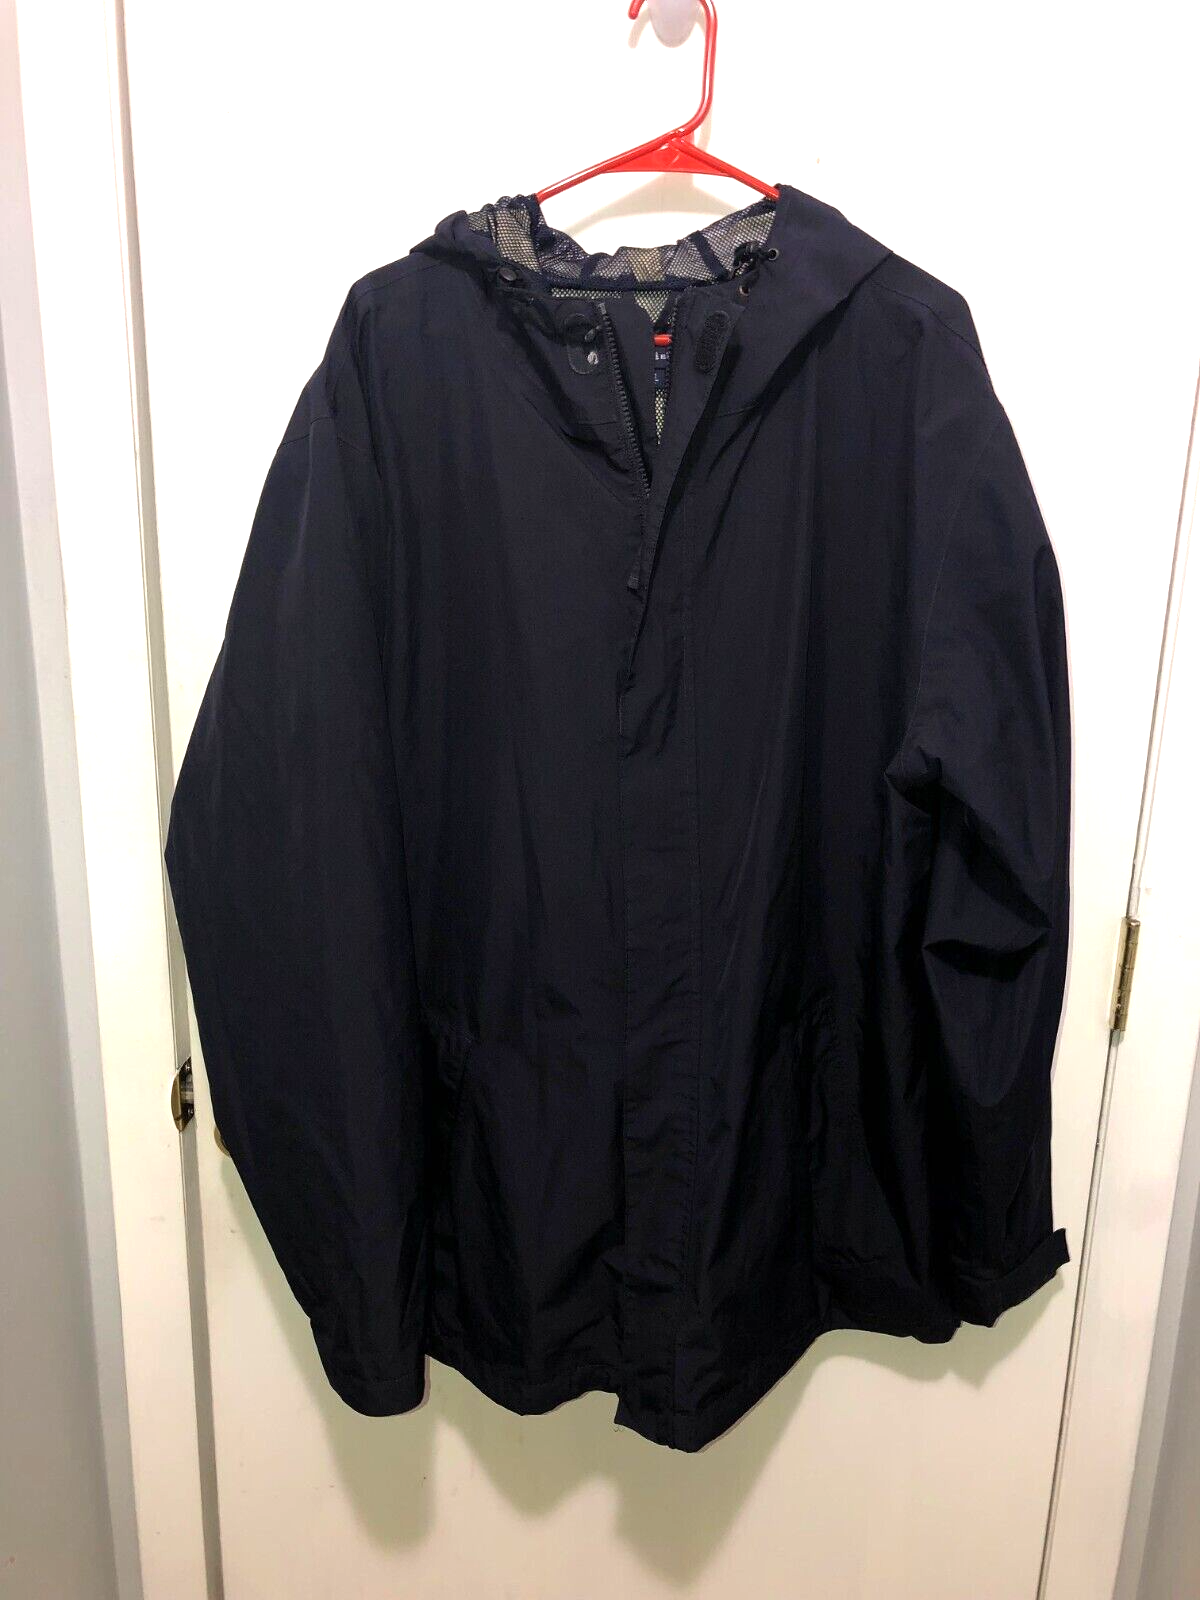 Primary image for Lands End Men's XXL Lined Hooded Windbreaker Rain Jacket Navy Blue